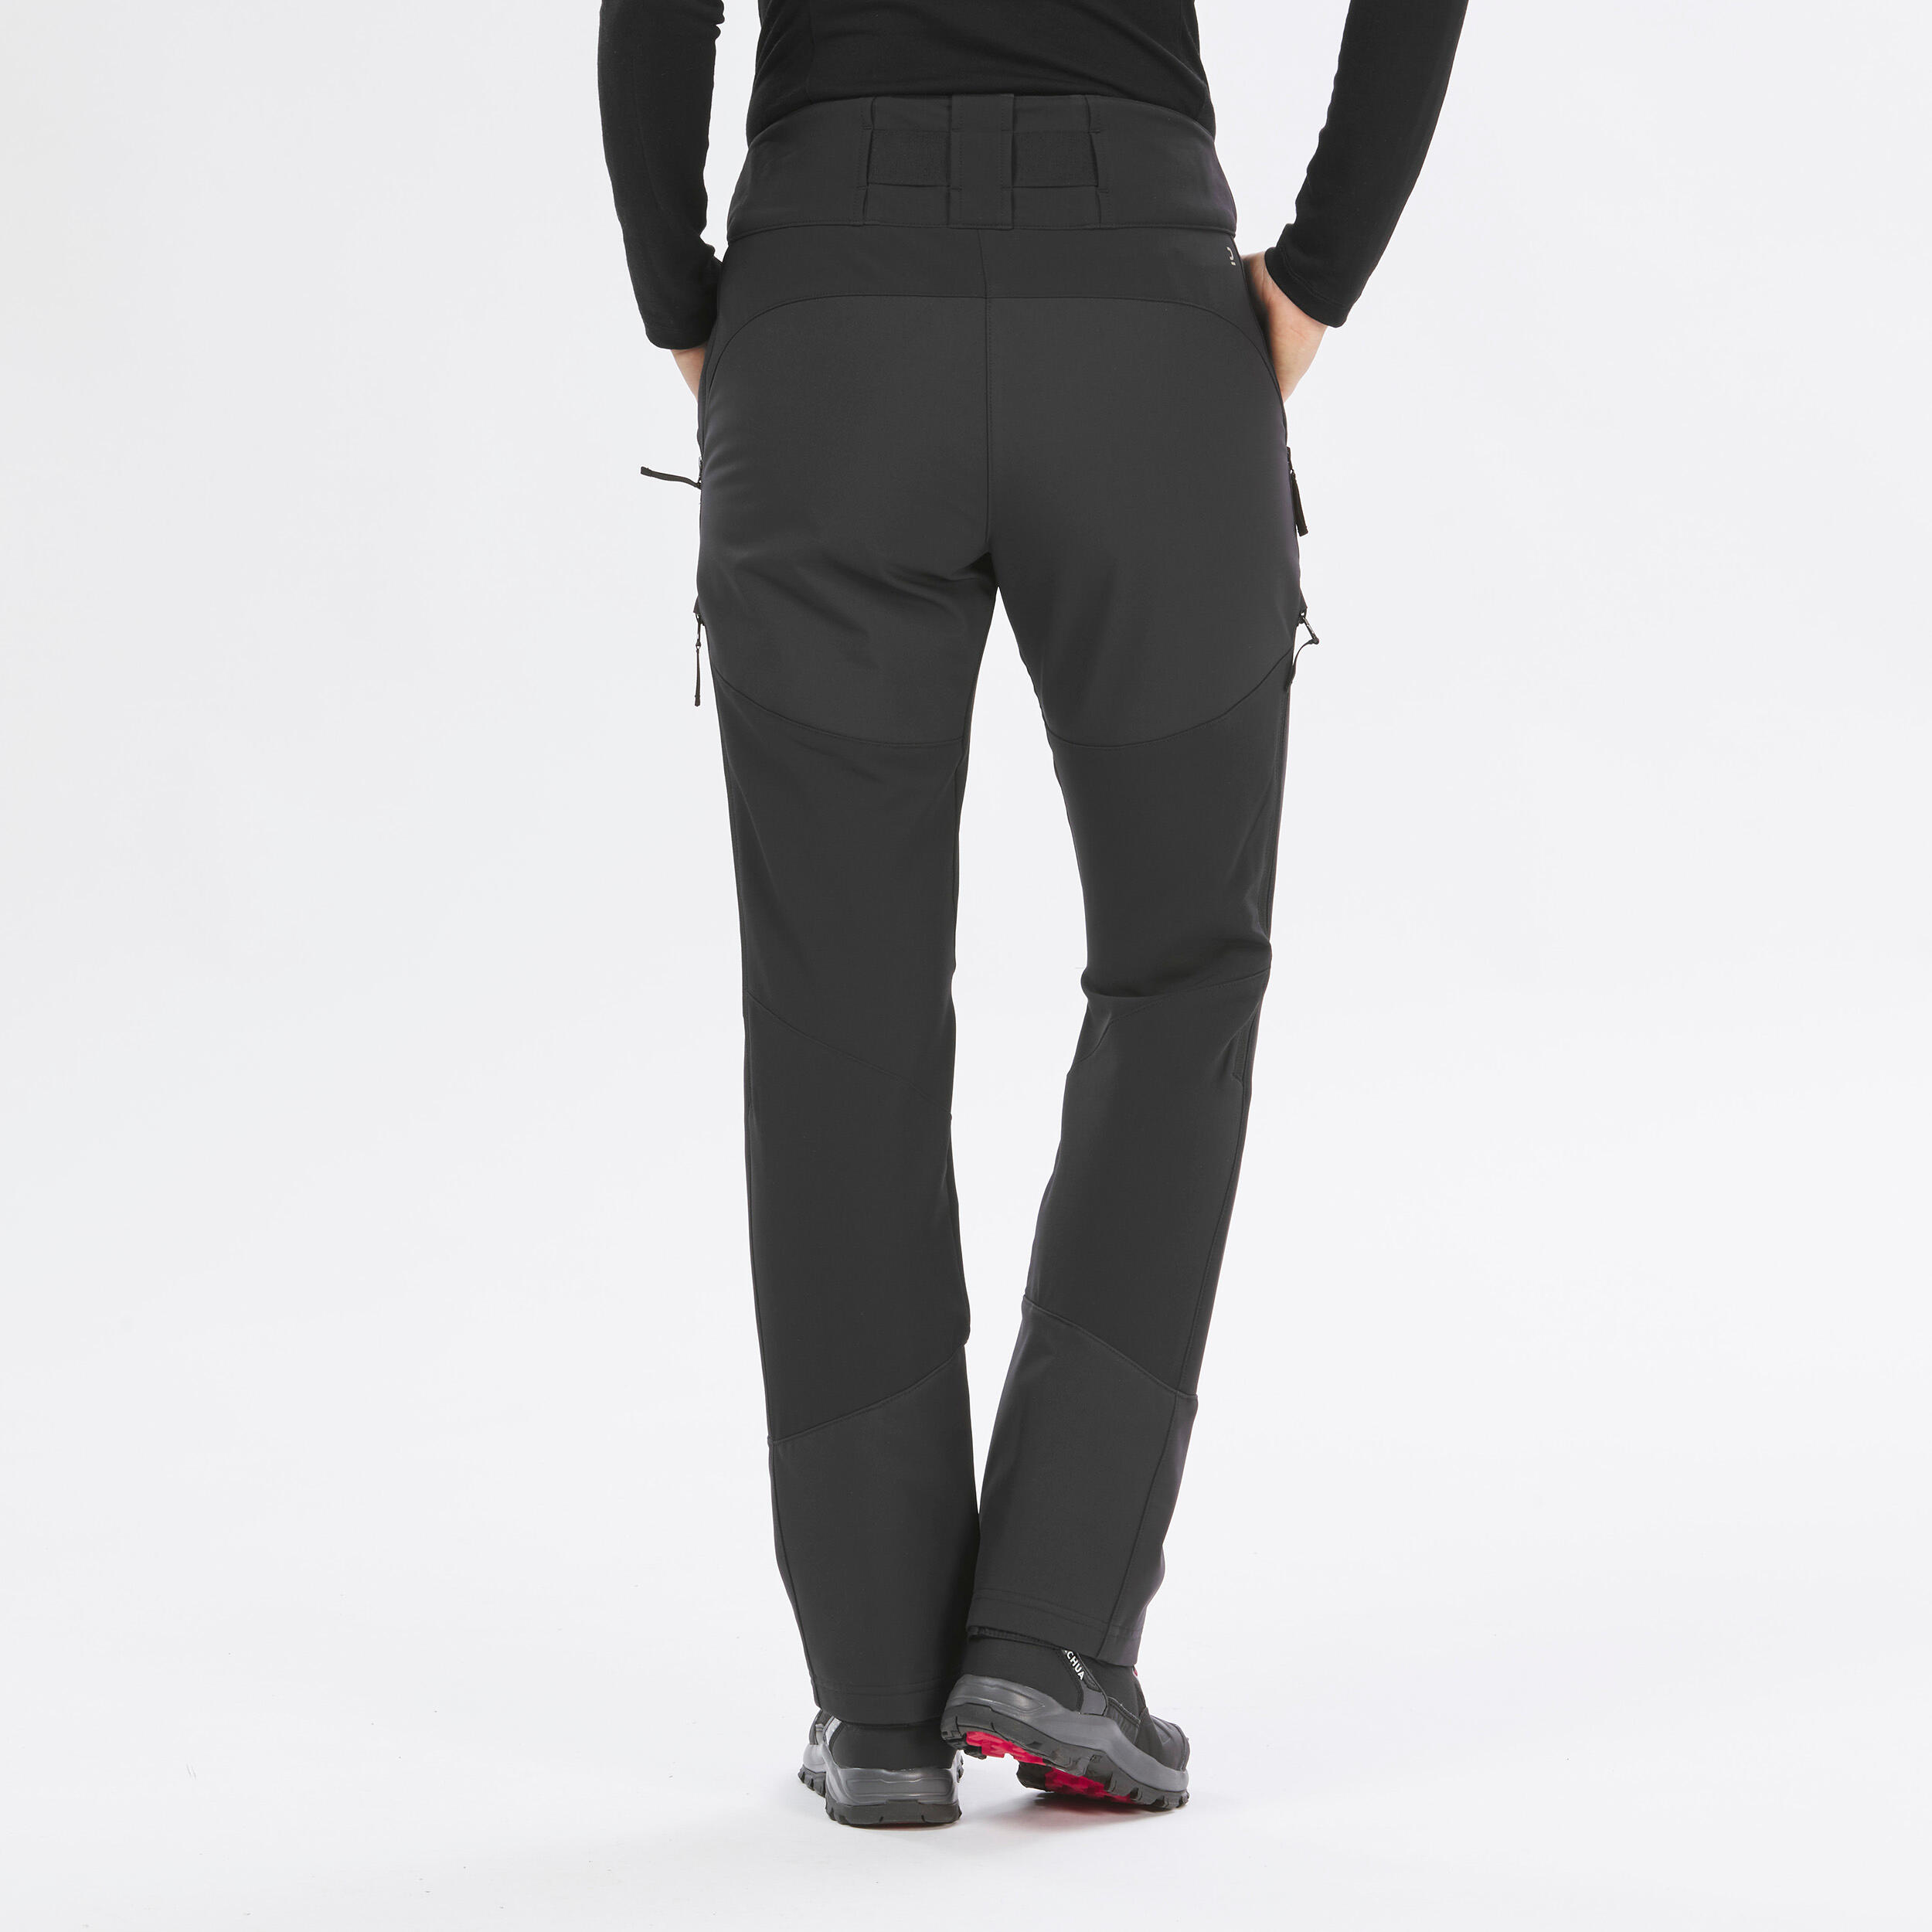 Women's Breathable Warm Pants - SH 500 Black - Black - Quechua - Decathlon